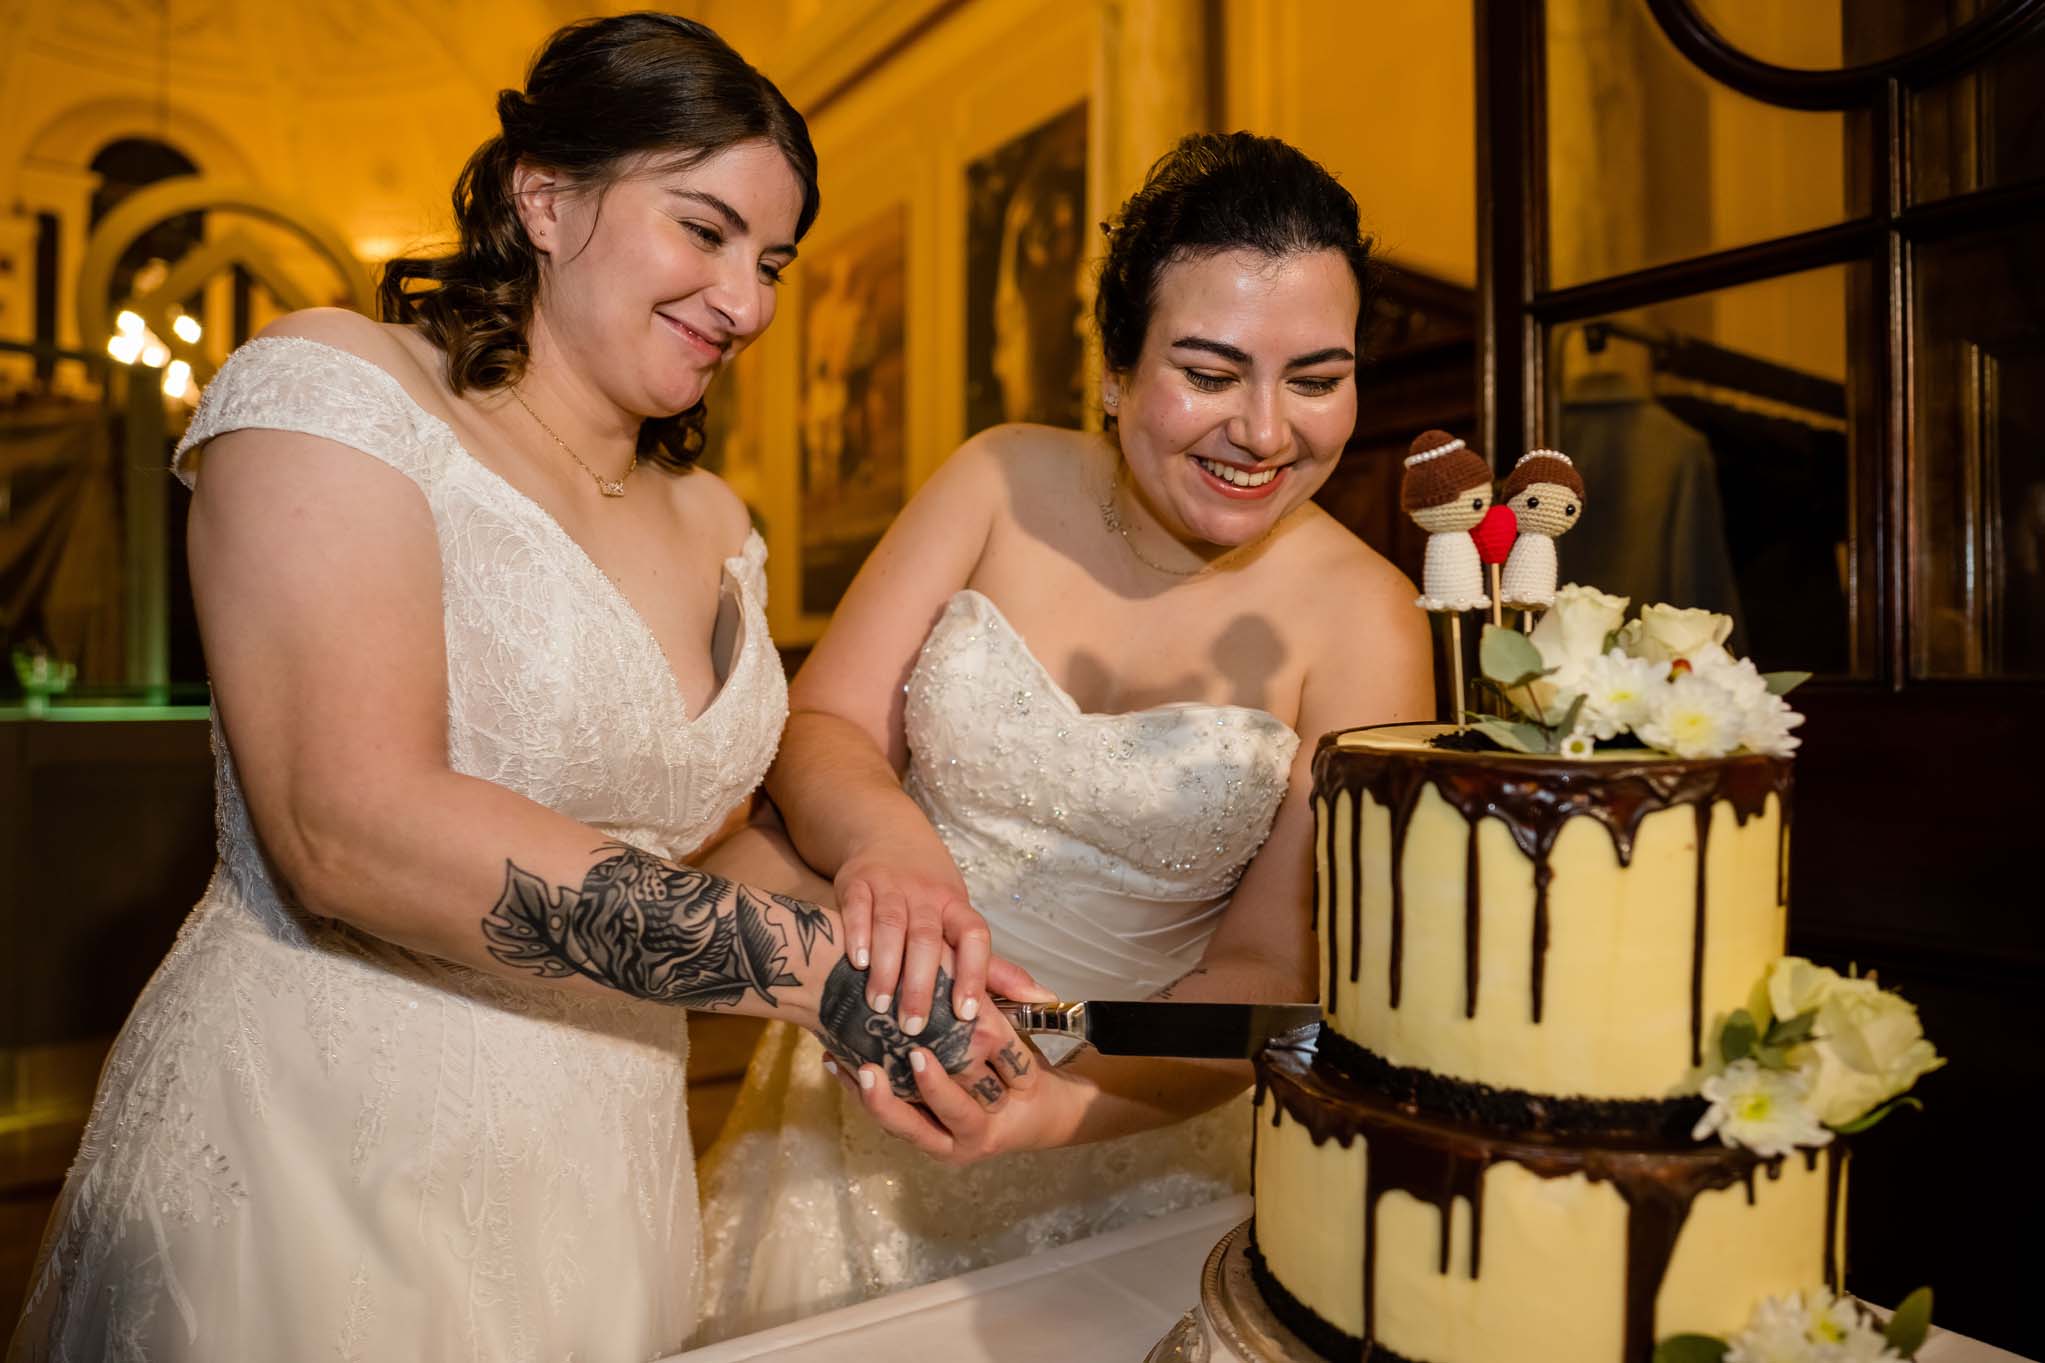 Cutting the wedding cake